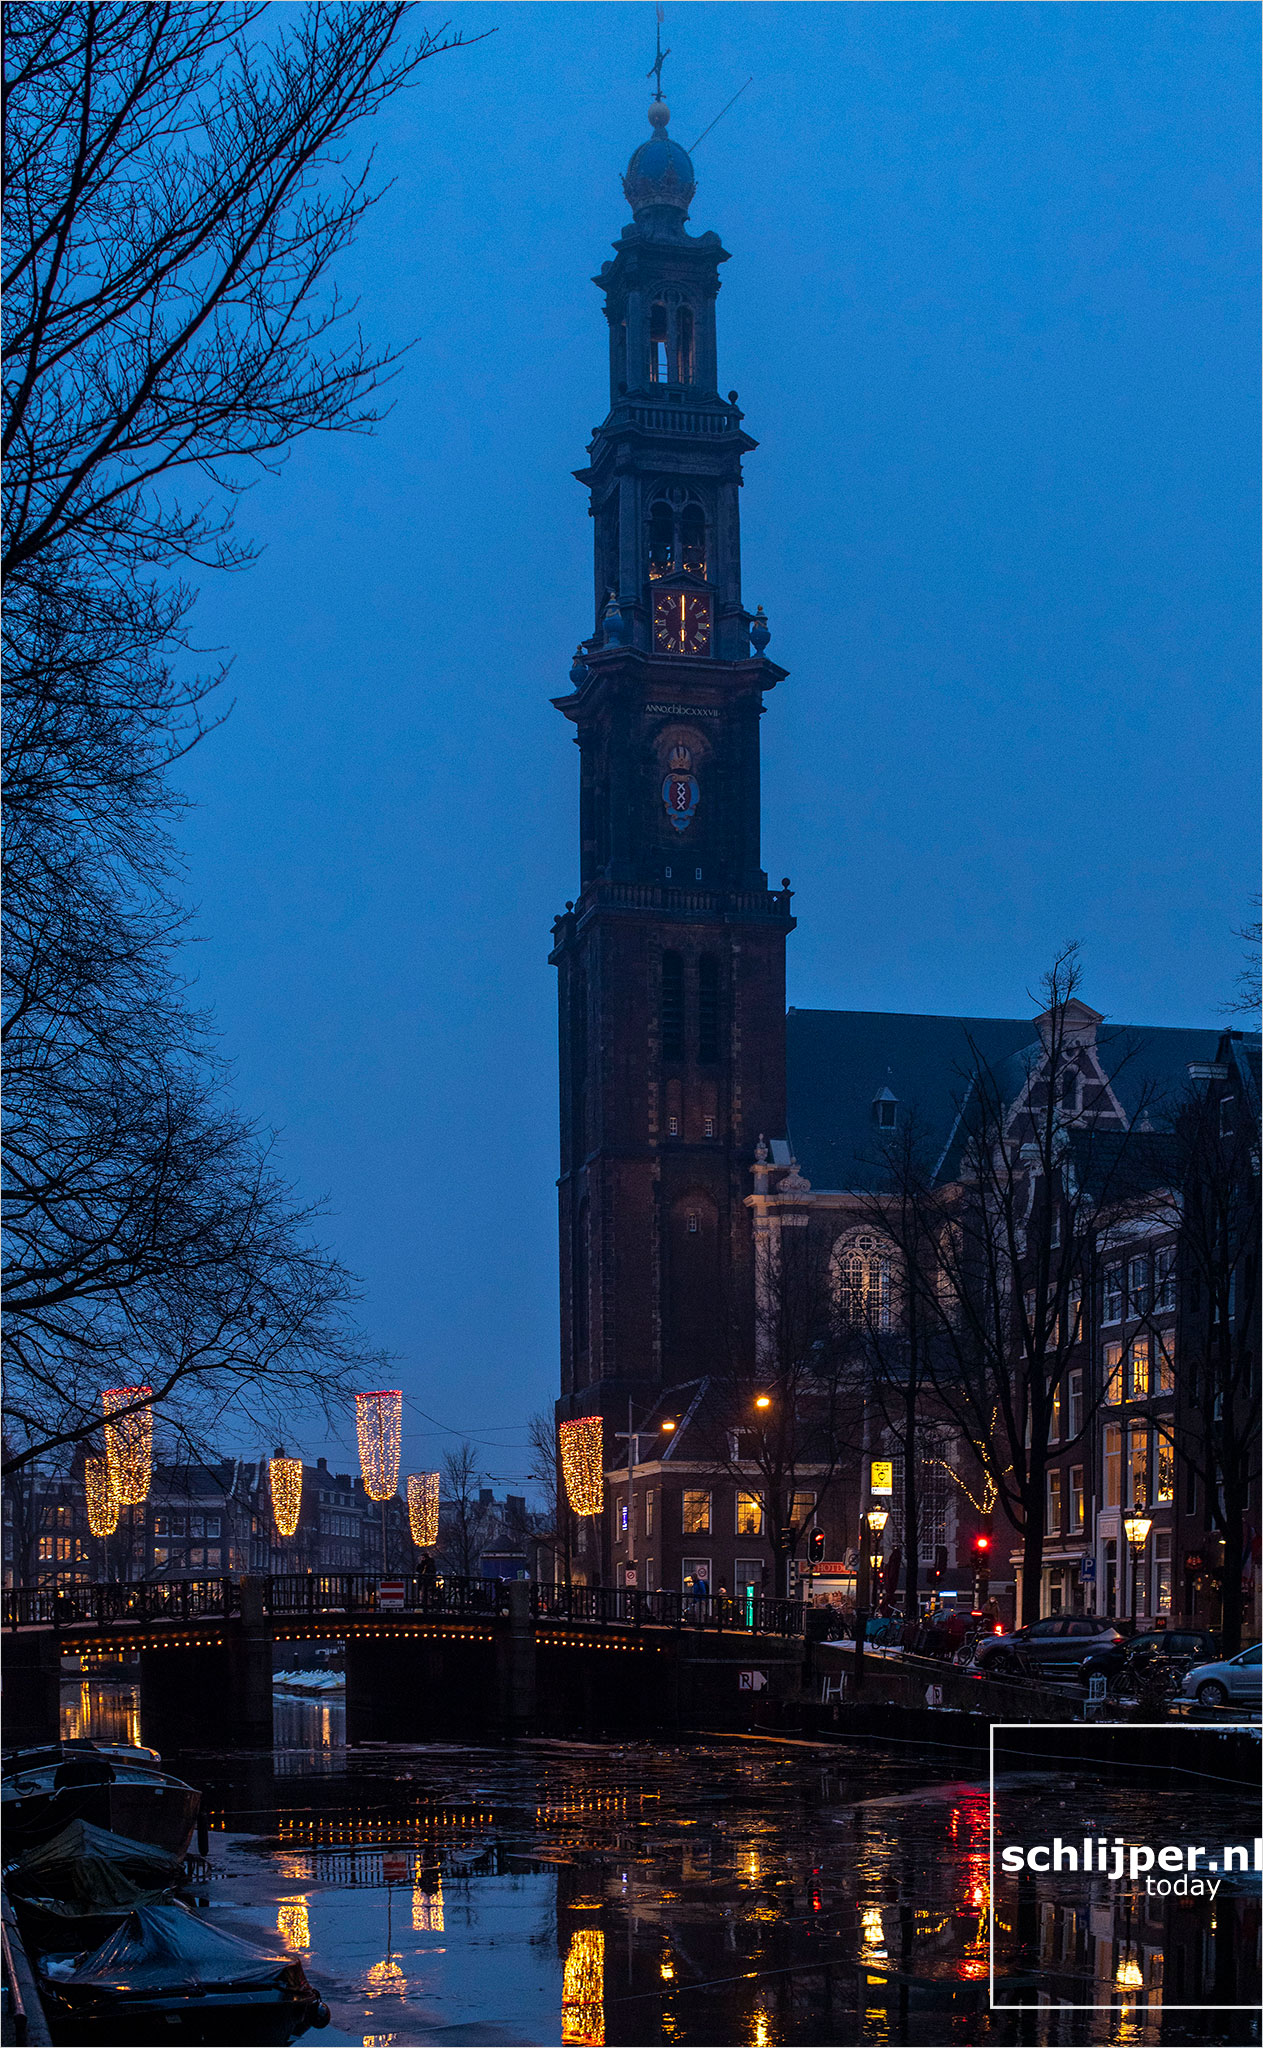 The Netherlands, Amsterdam, 15 februari 2021